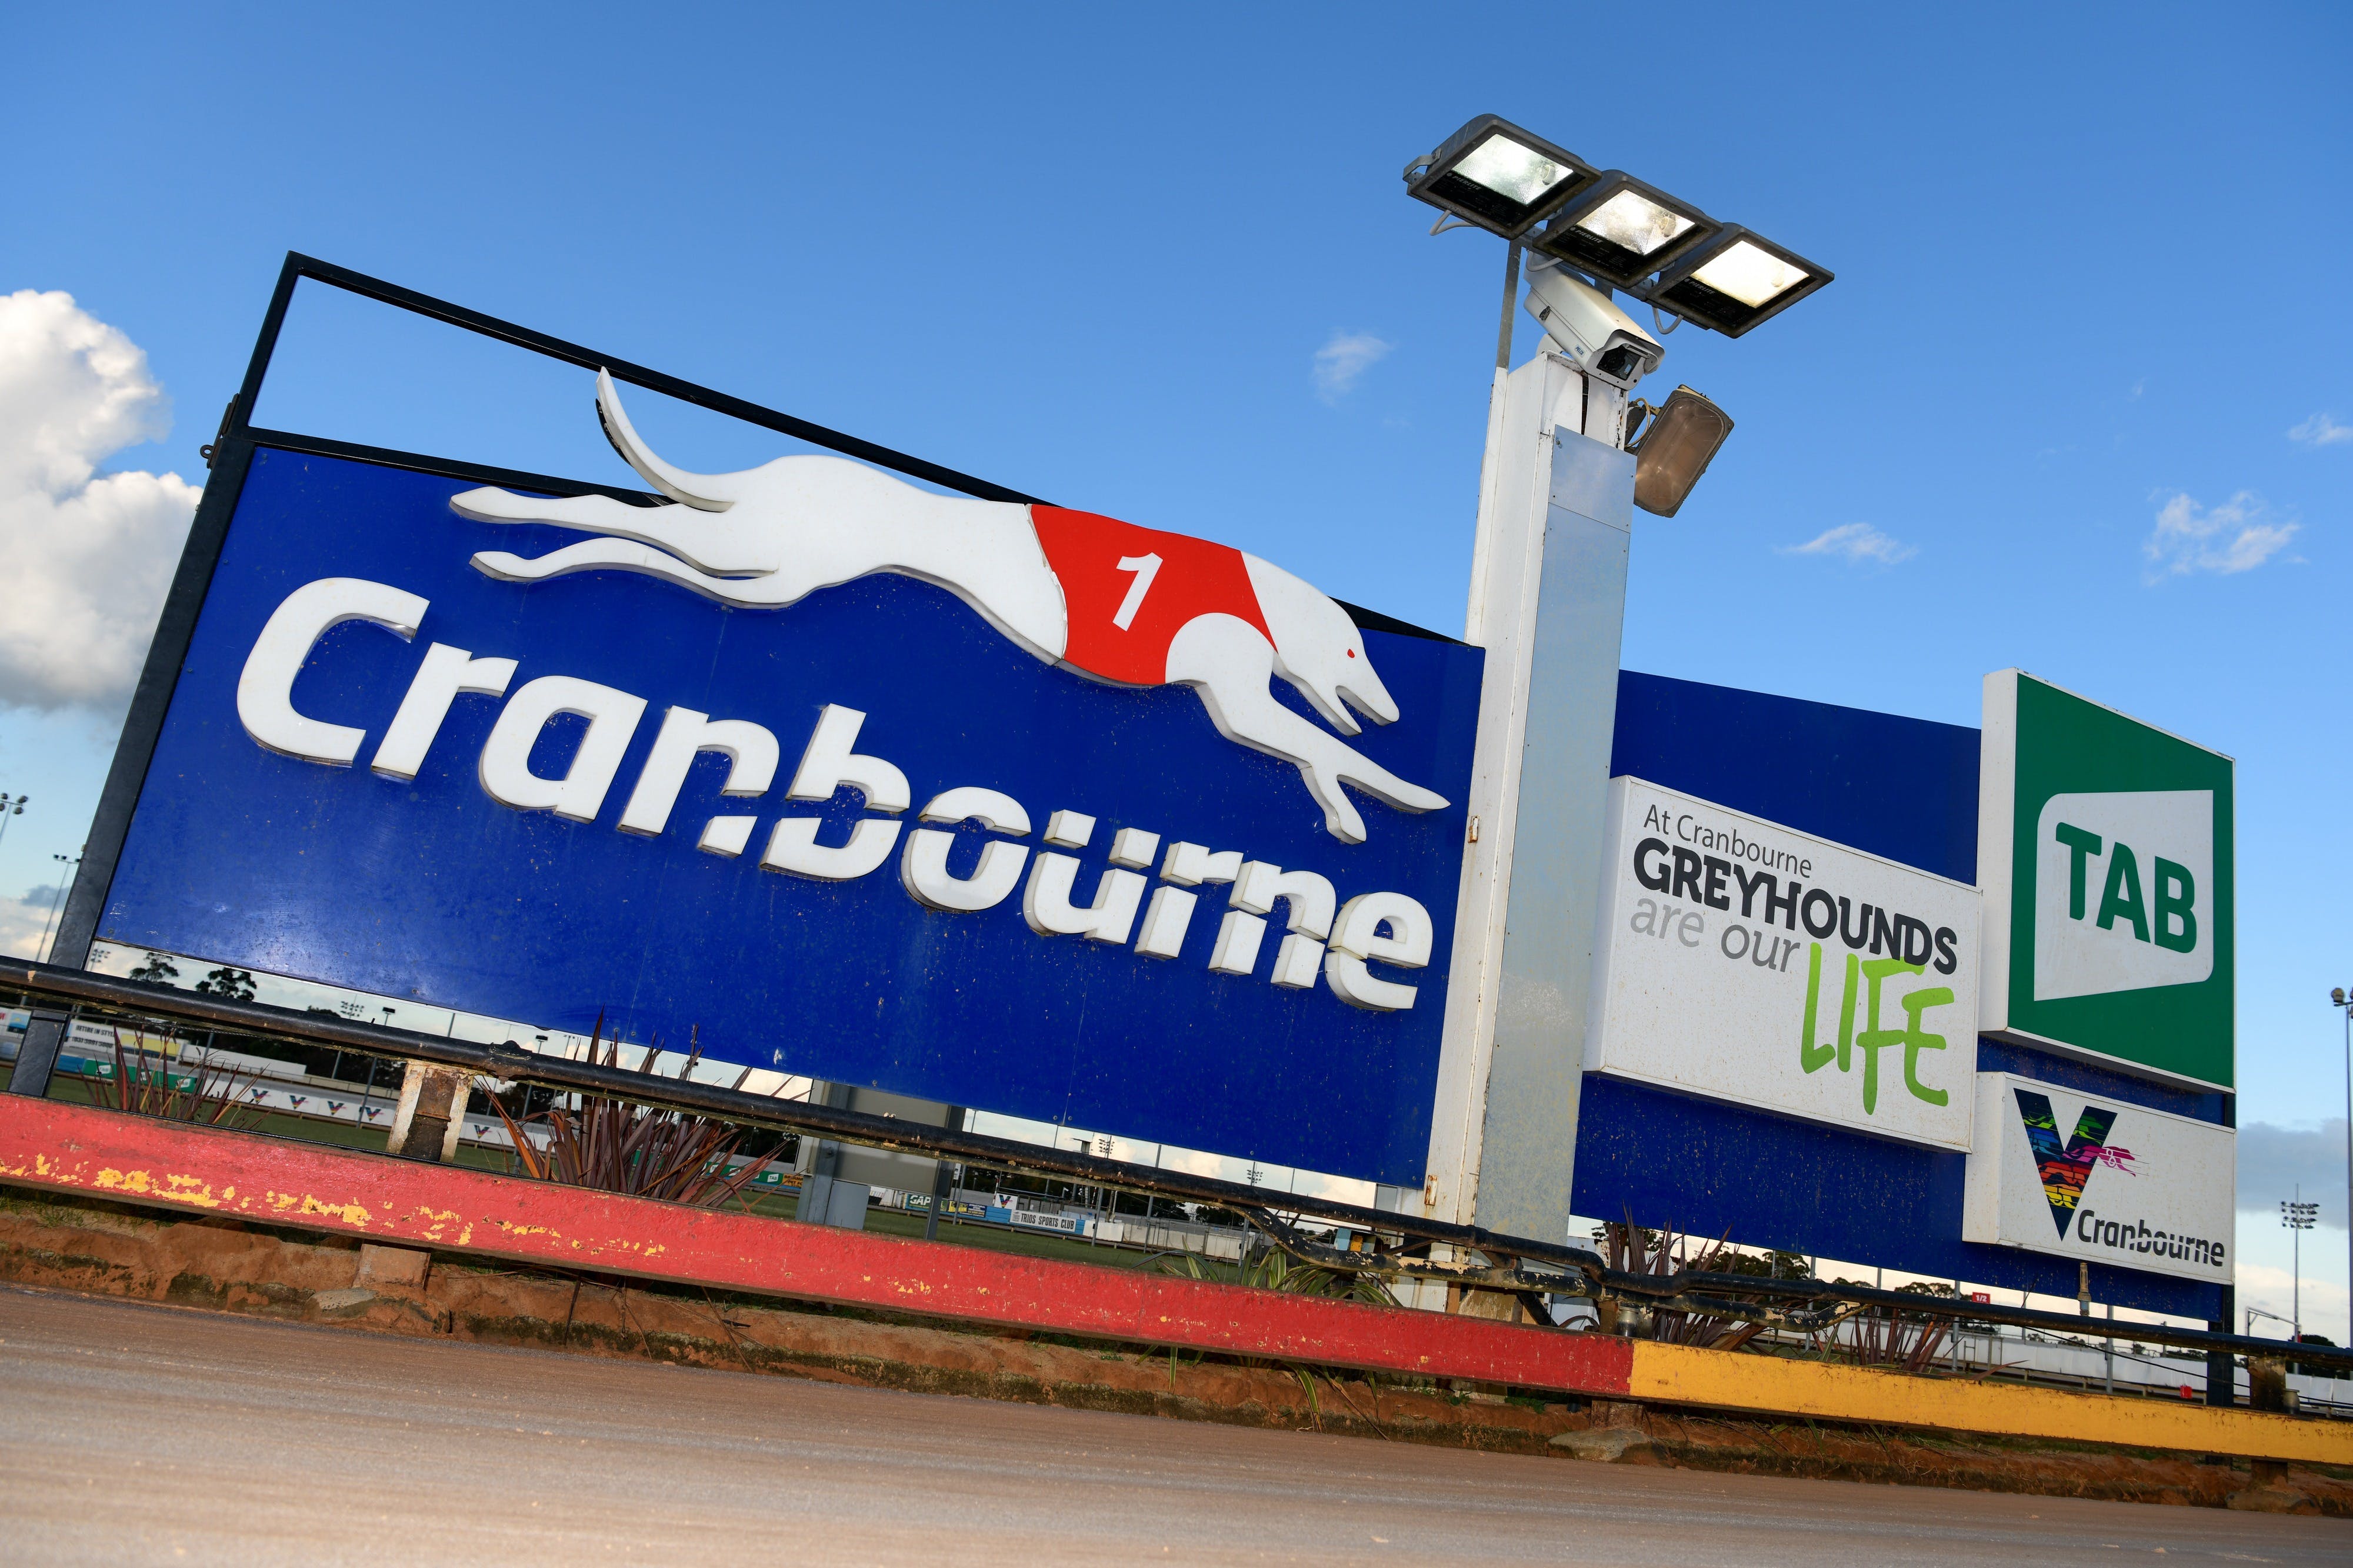 Cranbourne Greyhound Racing Club - Redcliffe Tourism